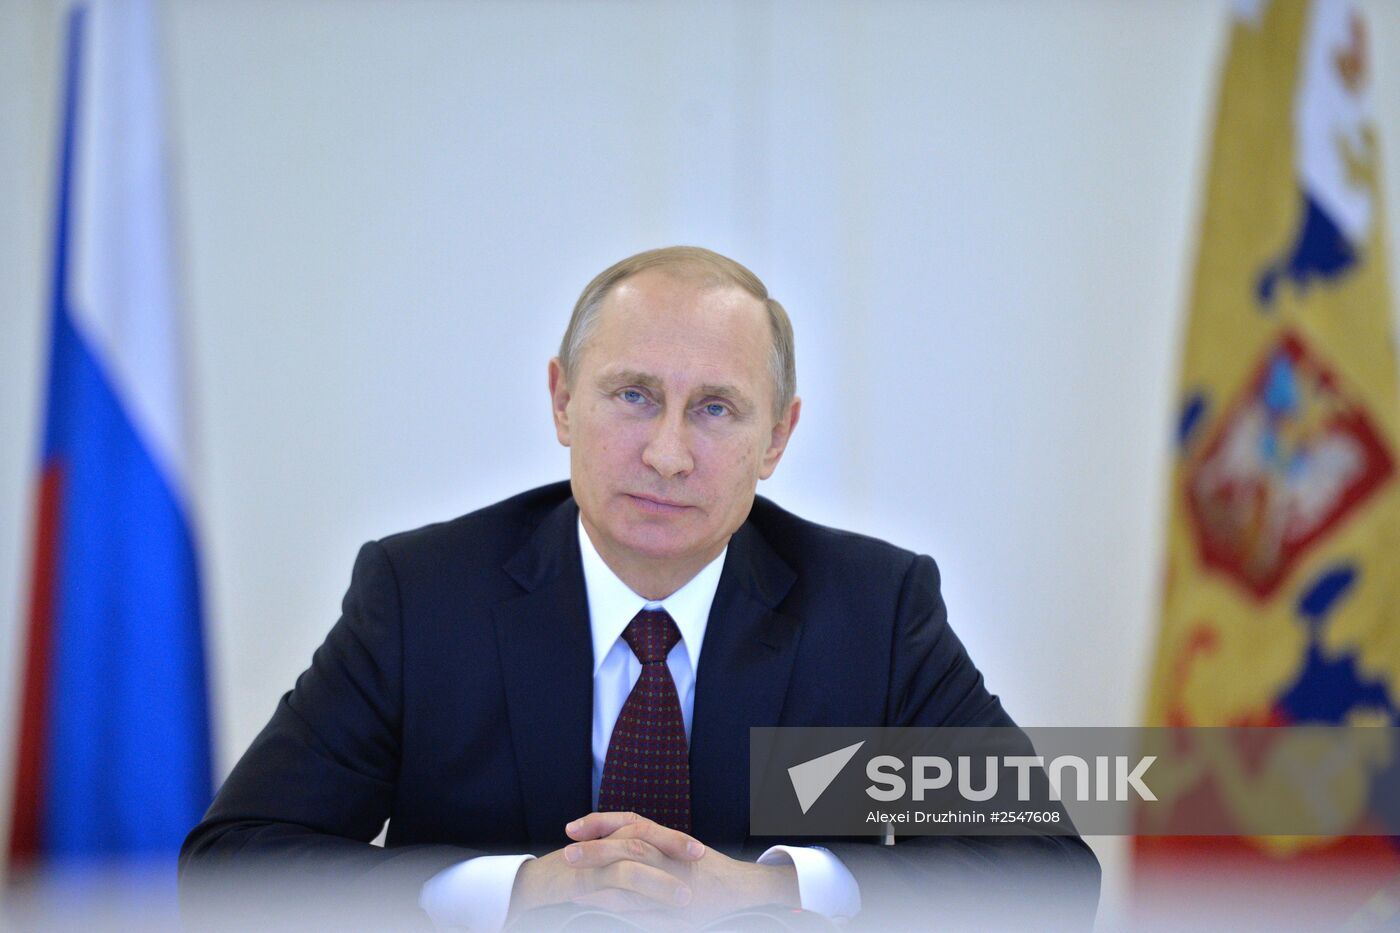 Vladimir Putin attends launch of gas field No. 1, Bovanenkovo gas field